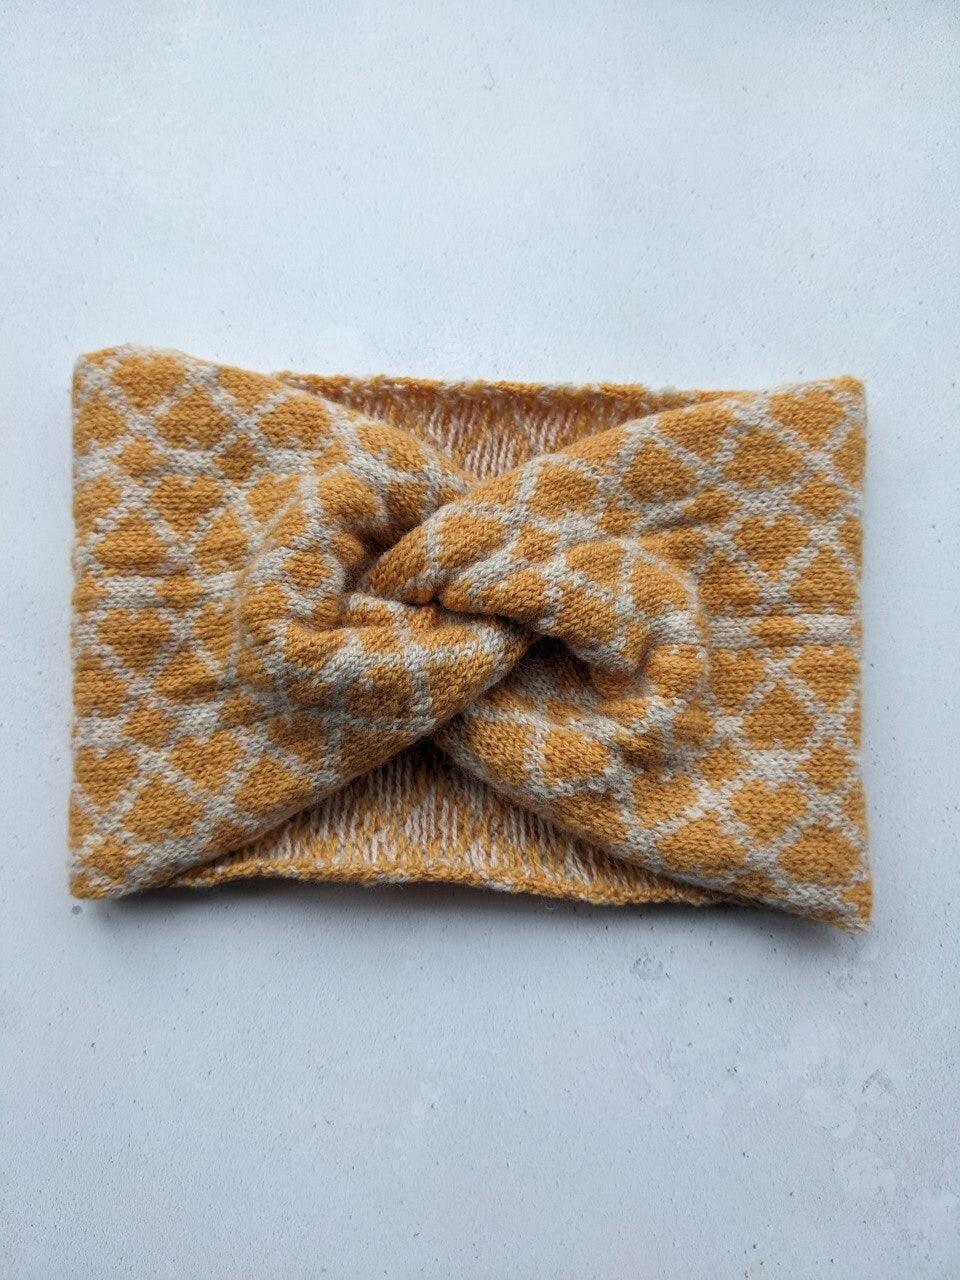 Merino wool ear warmer knitted headband linen with golden yellow hearts